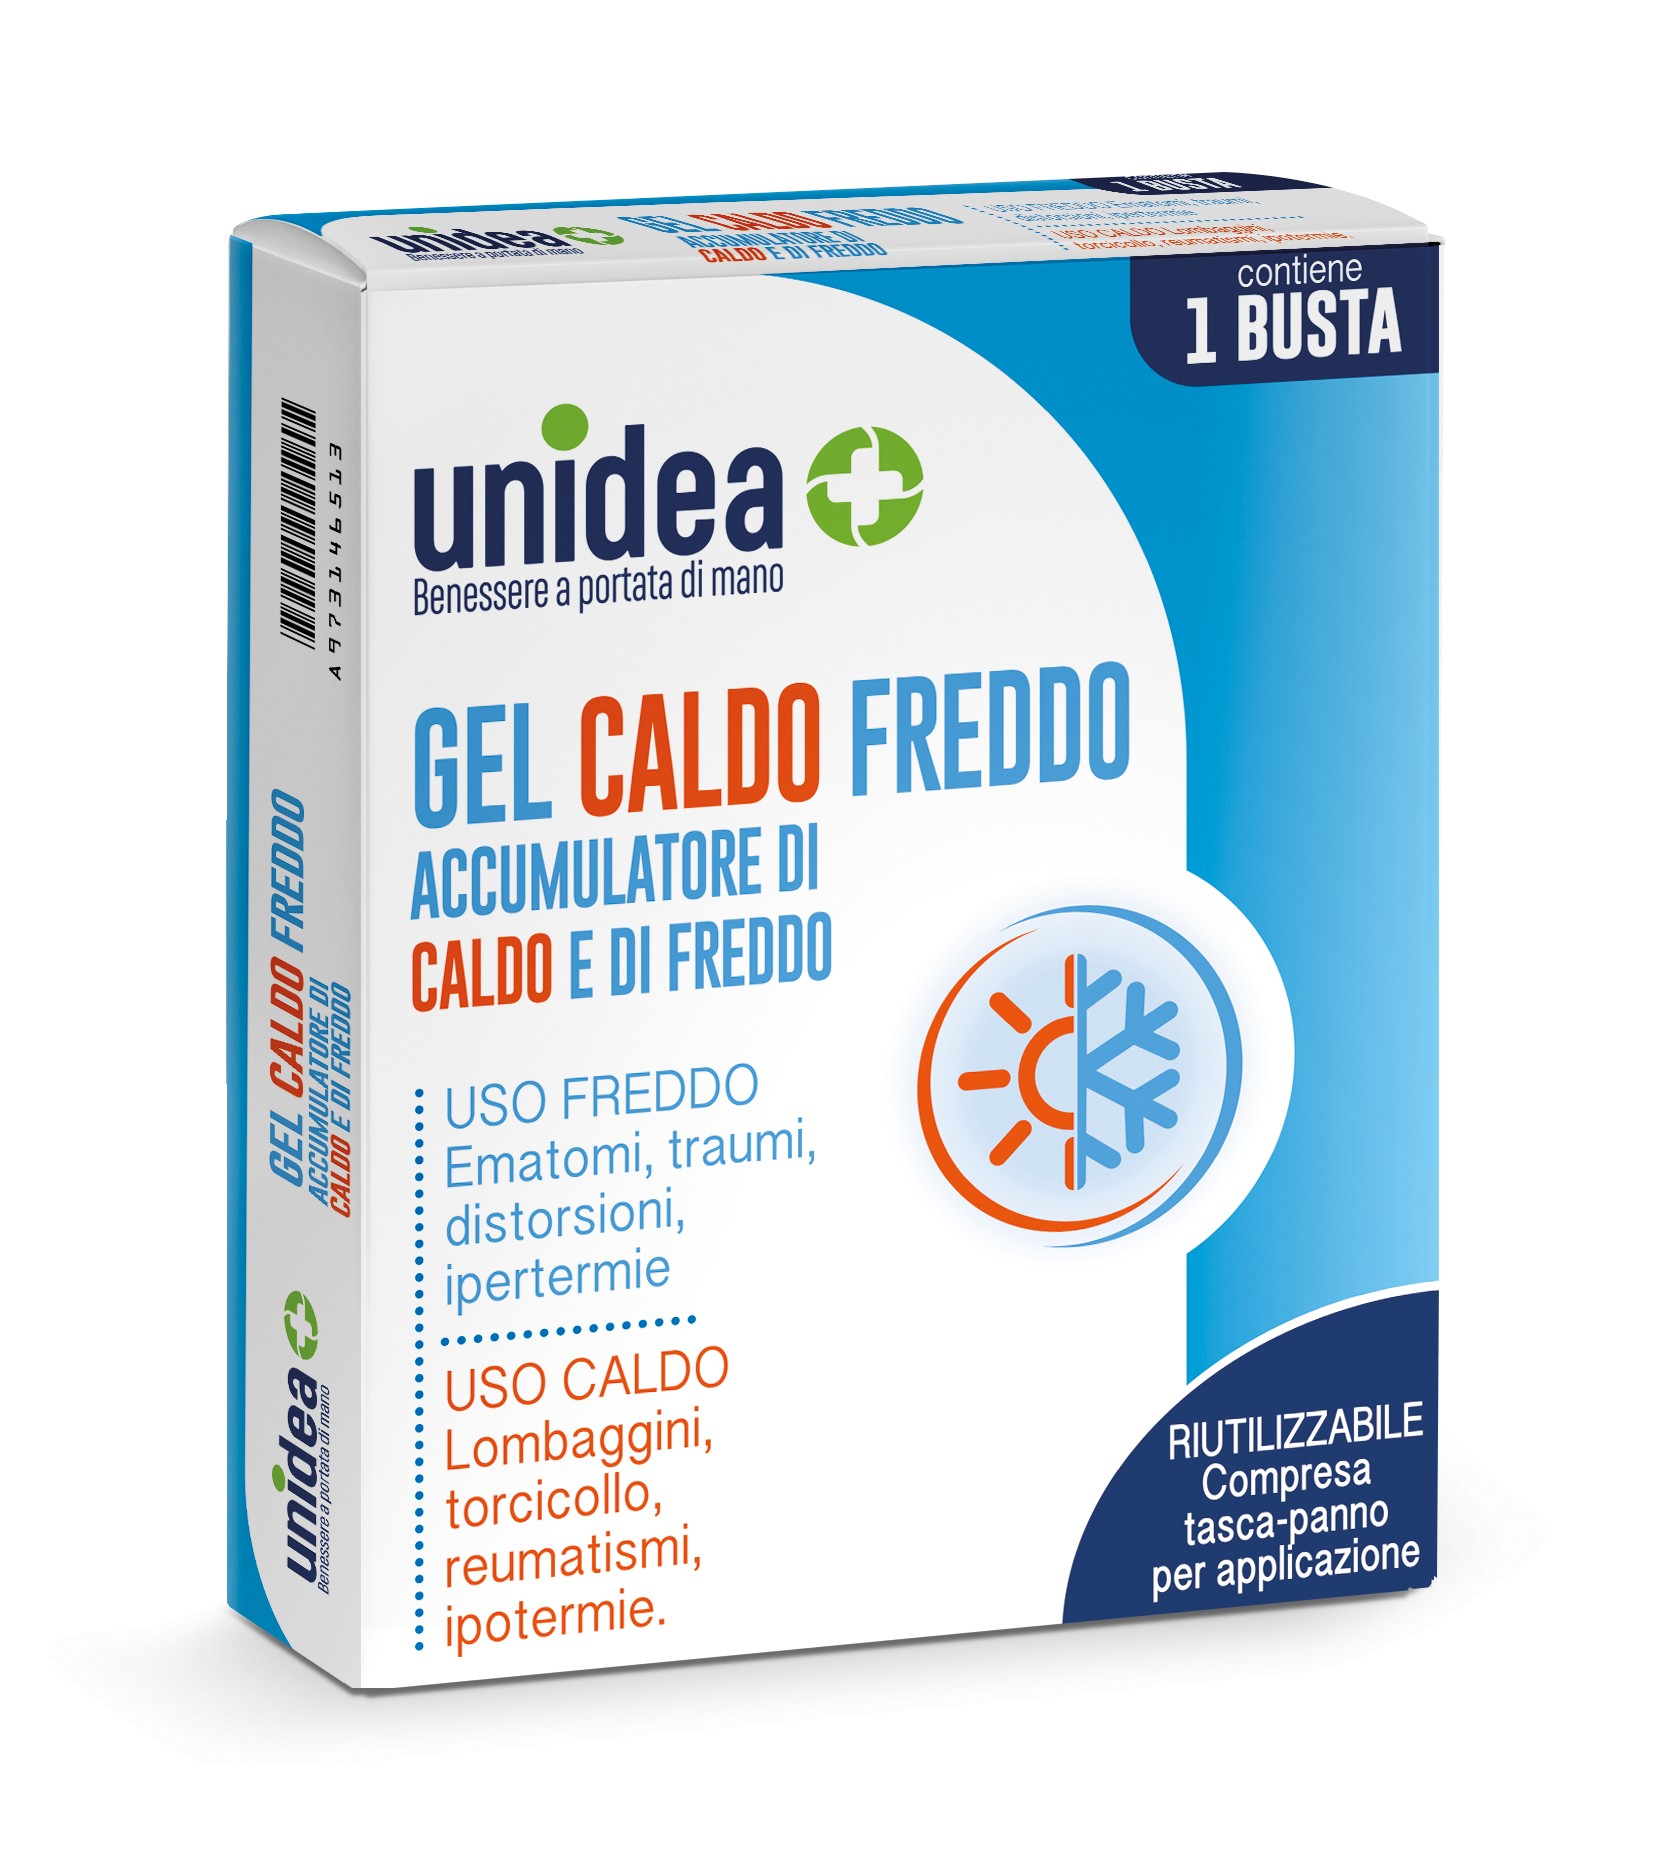 Image of GEL CALDO FREDDO unidea 1 Busta